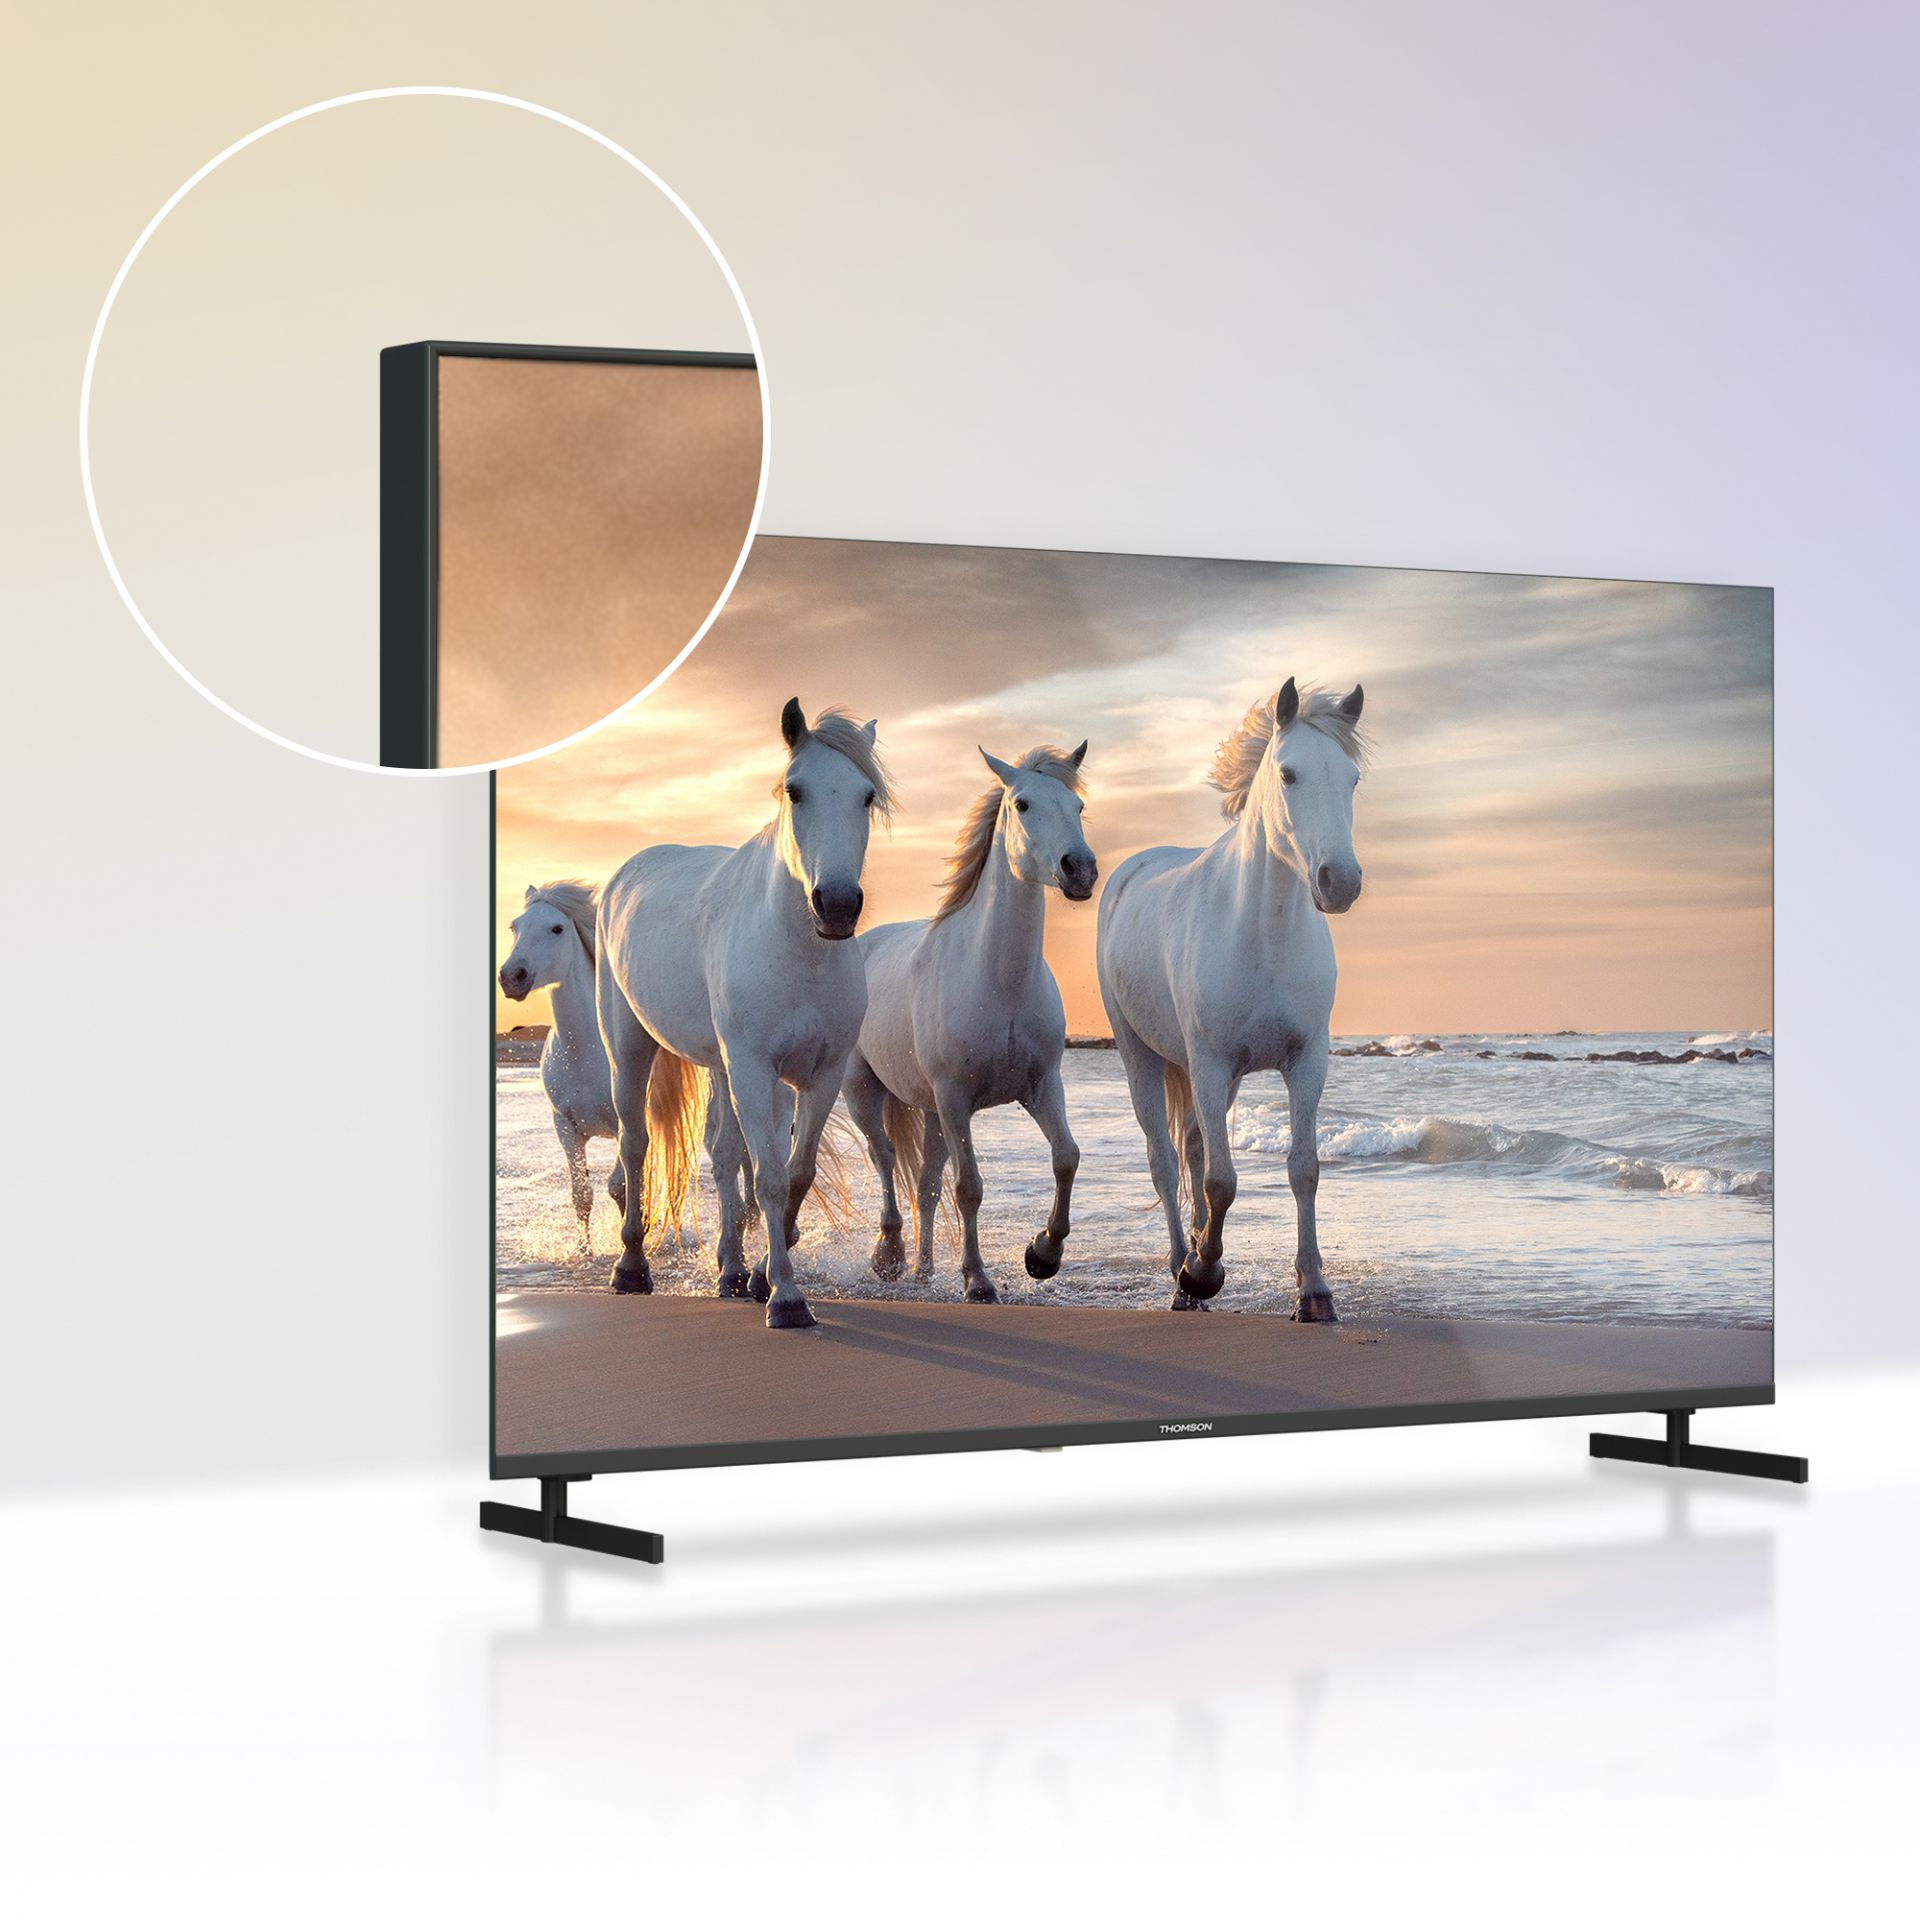 THOMSON 43UA5S13 LED TV) (Flat, / UHD TV 109 43 4K, Zoll cm, SMART